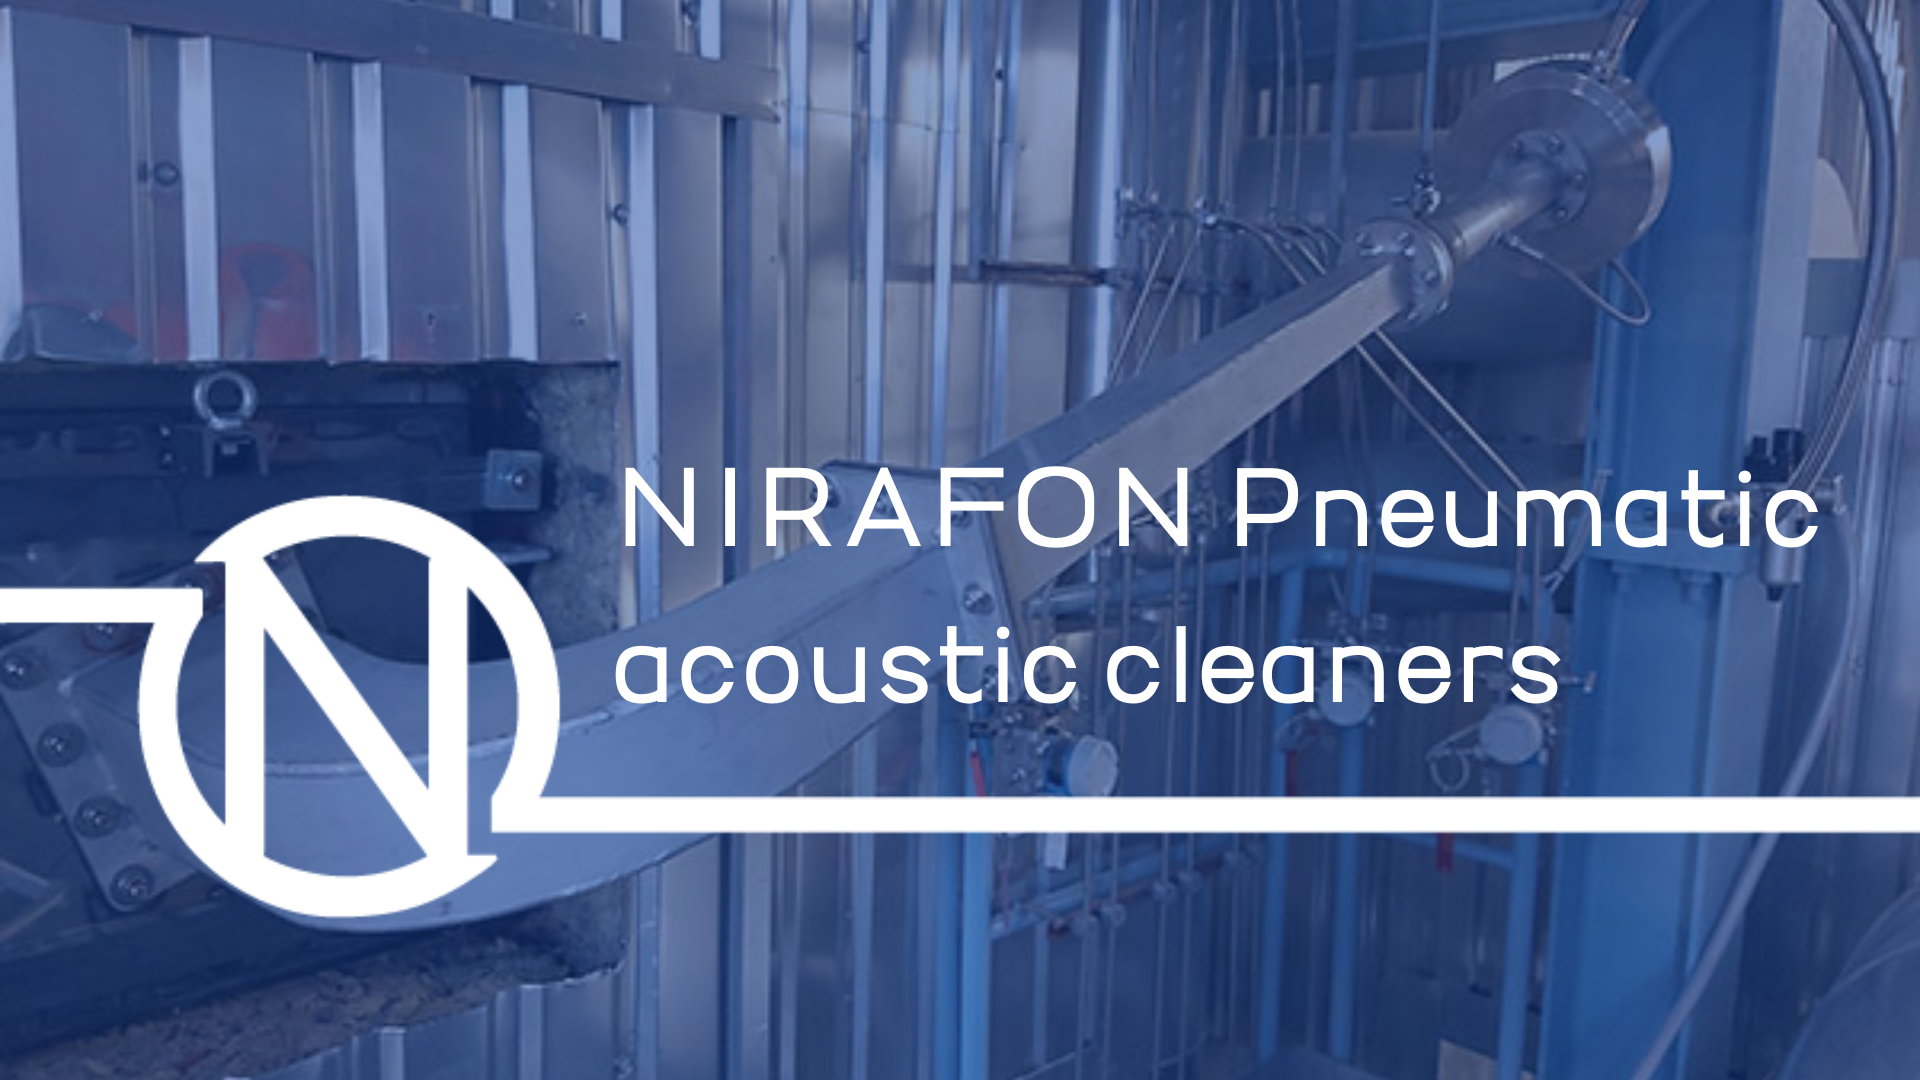 Nirafon Pneumatic acoustic cleaners